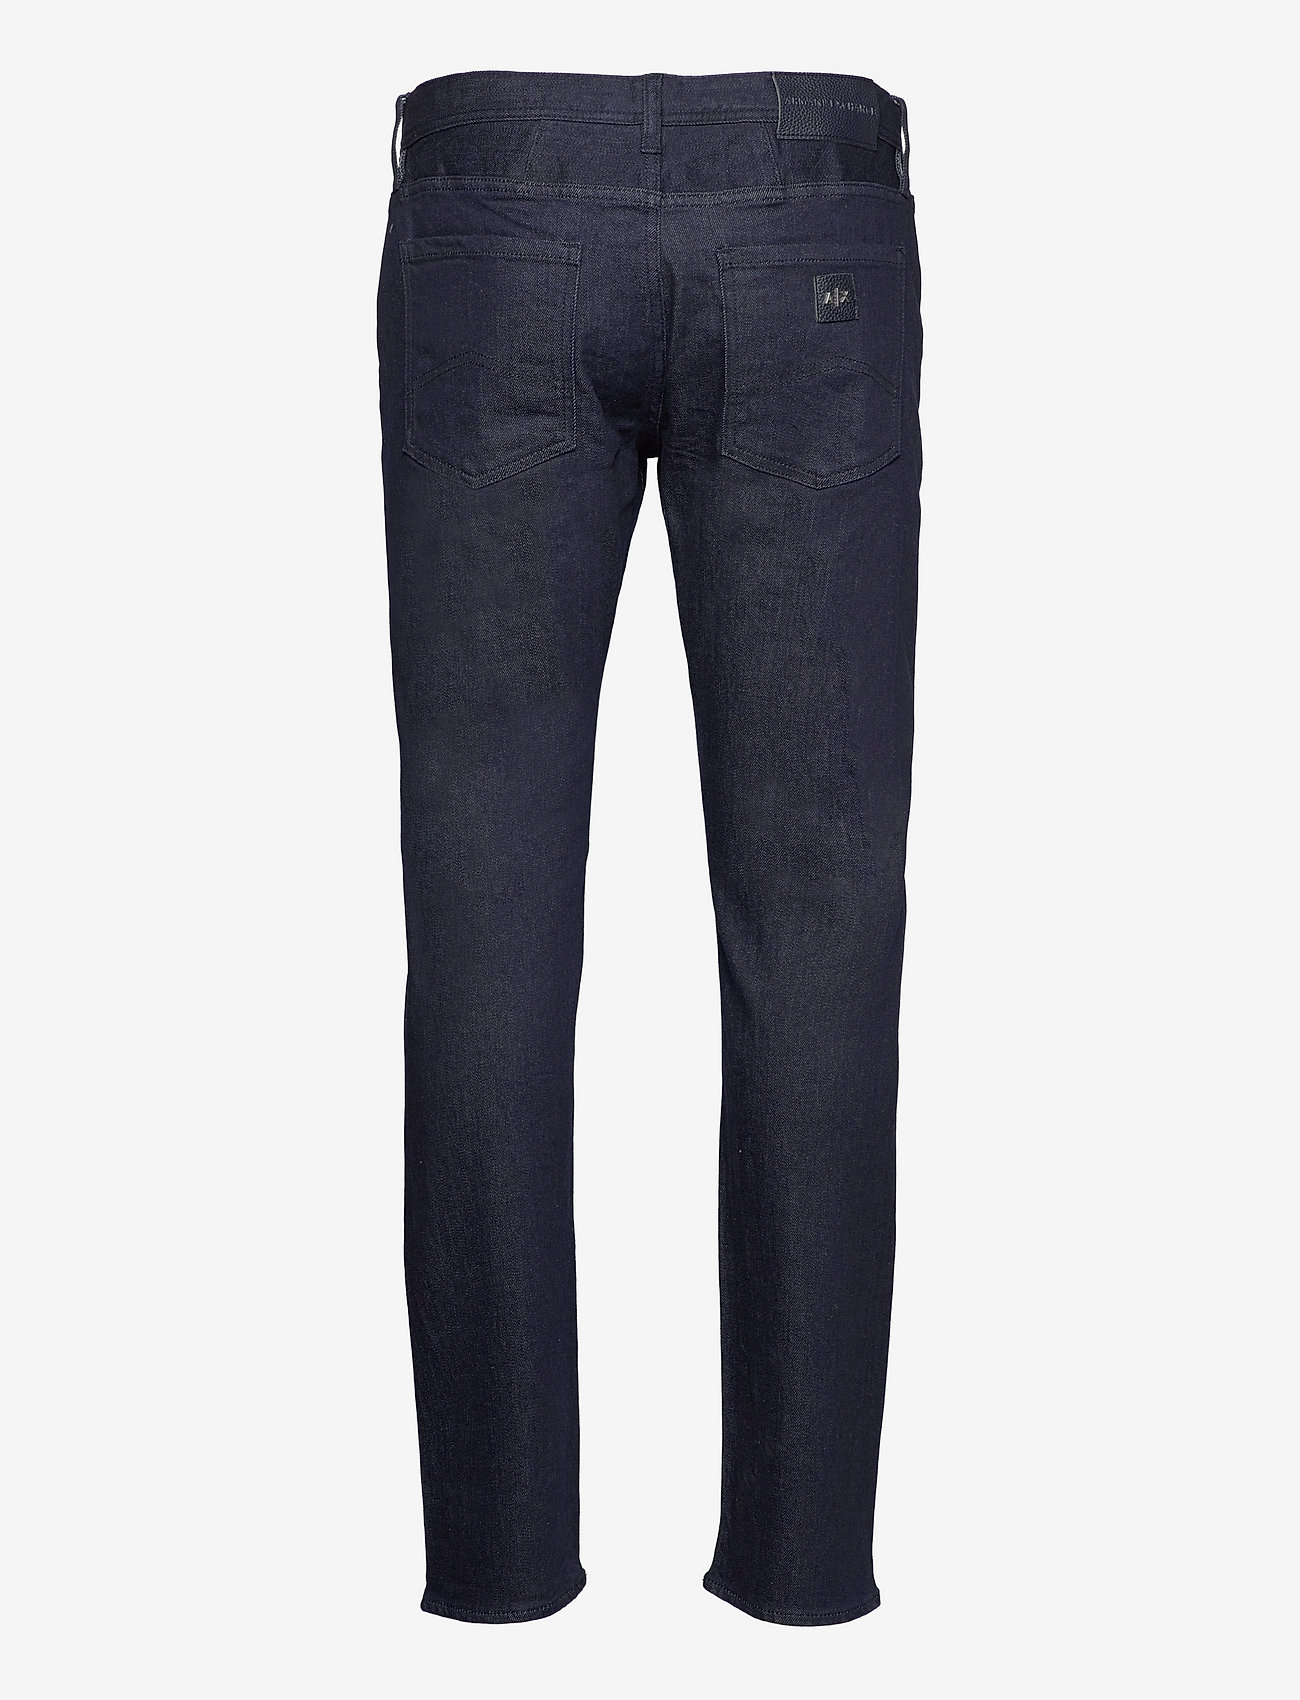 Armani Exchange - 5 POCKET JEANS - slim jeans - indigo denim/indigo - 1